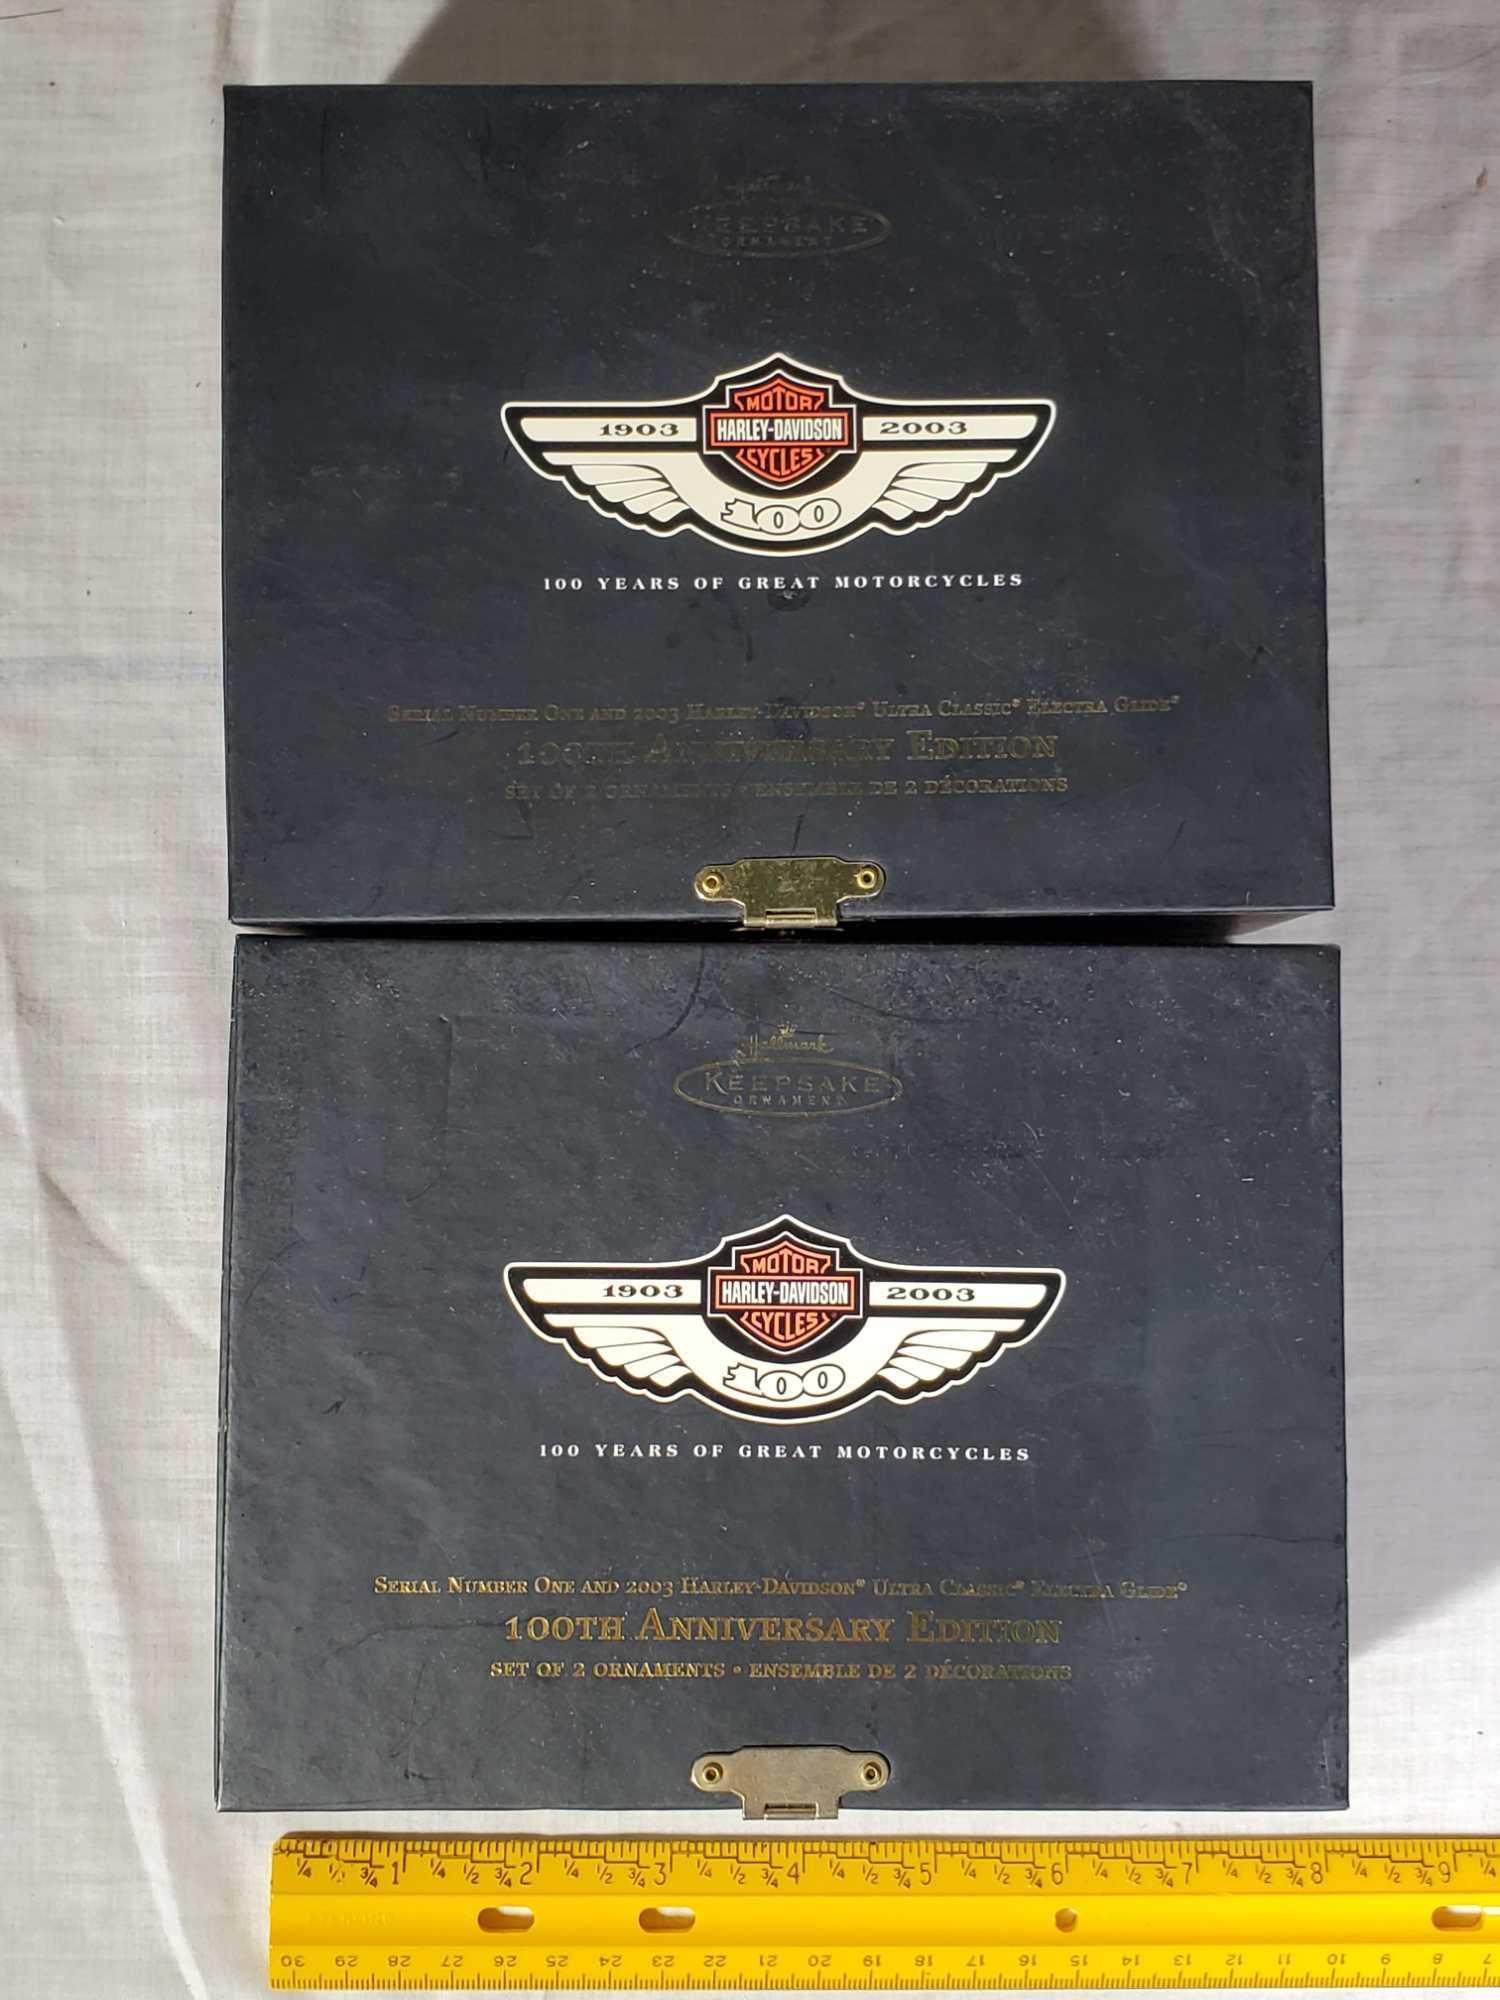 Harley Harley Harley Davidson Christmas Lot In Original Boxes